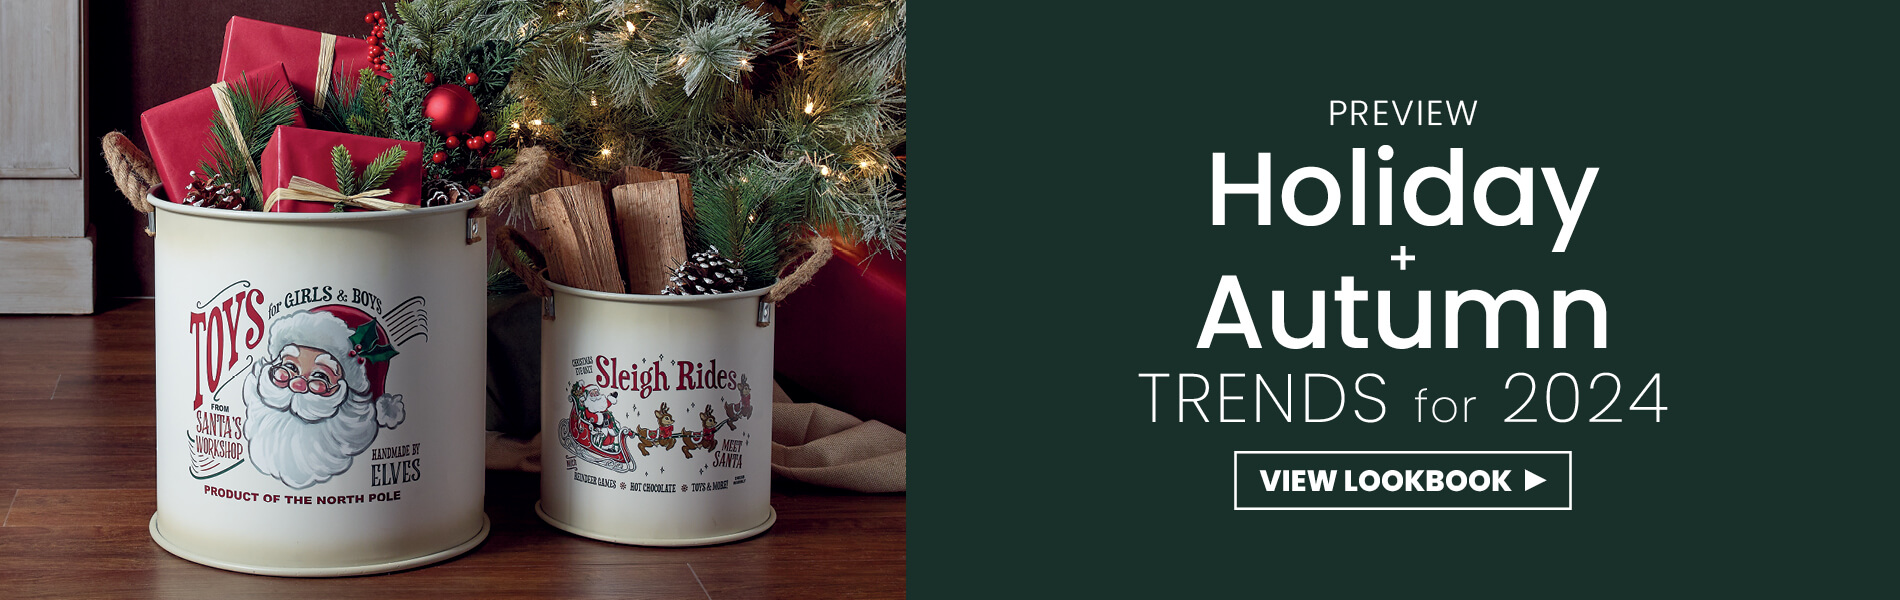 tin mugs and holiday decorations